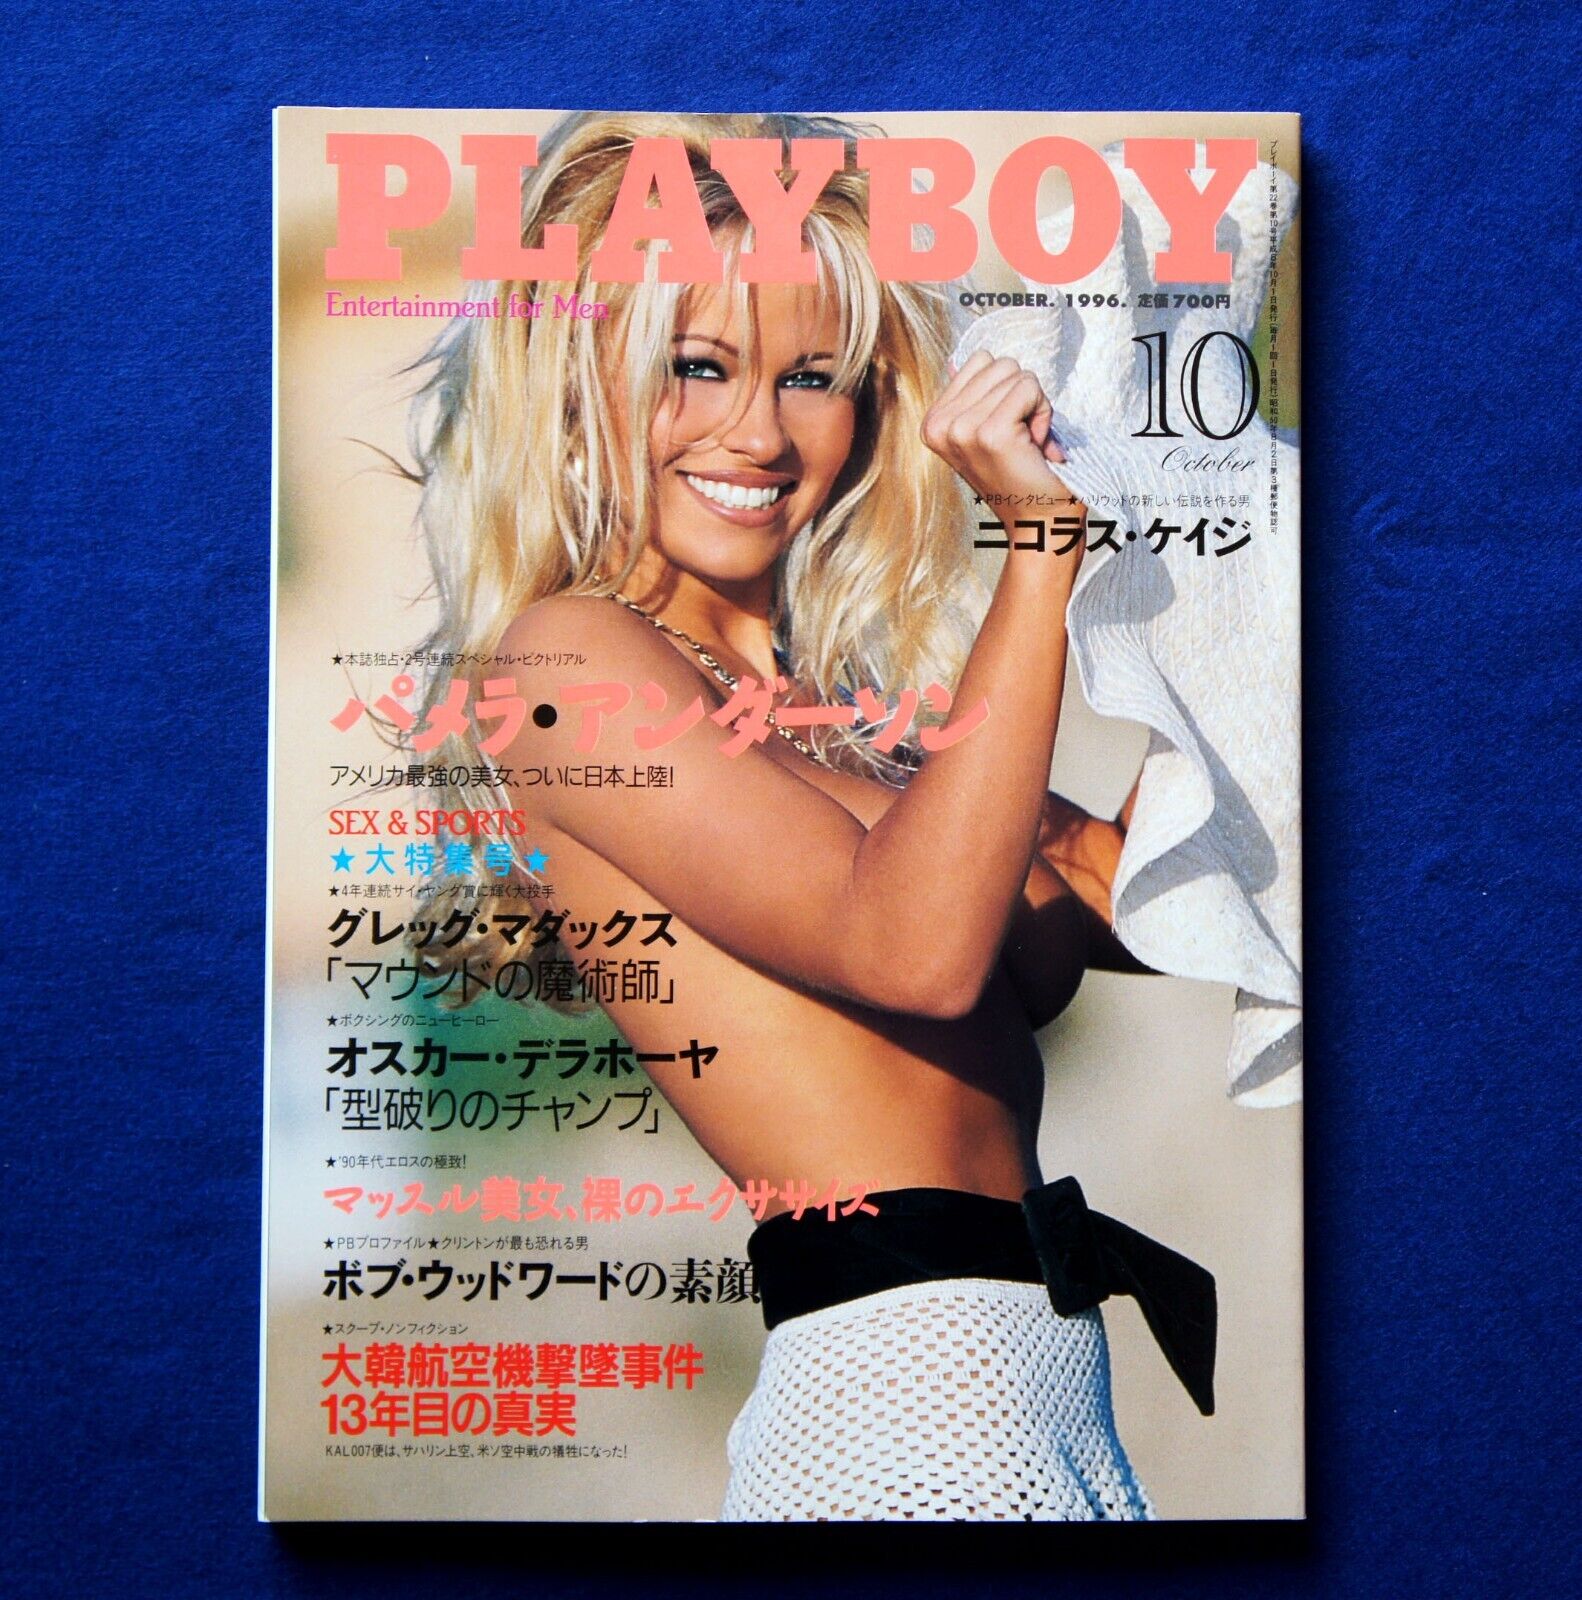 Playboy Japan October 1996 Issue 96 Pamela Anderson Gregory Maddux